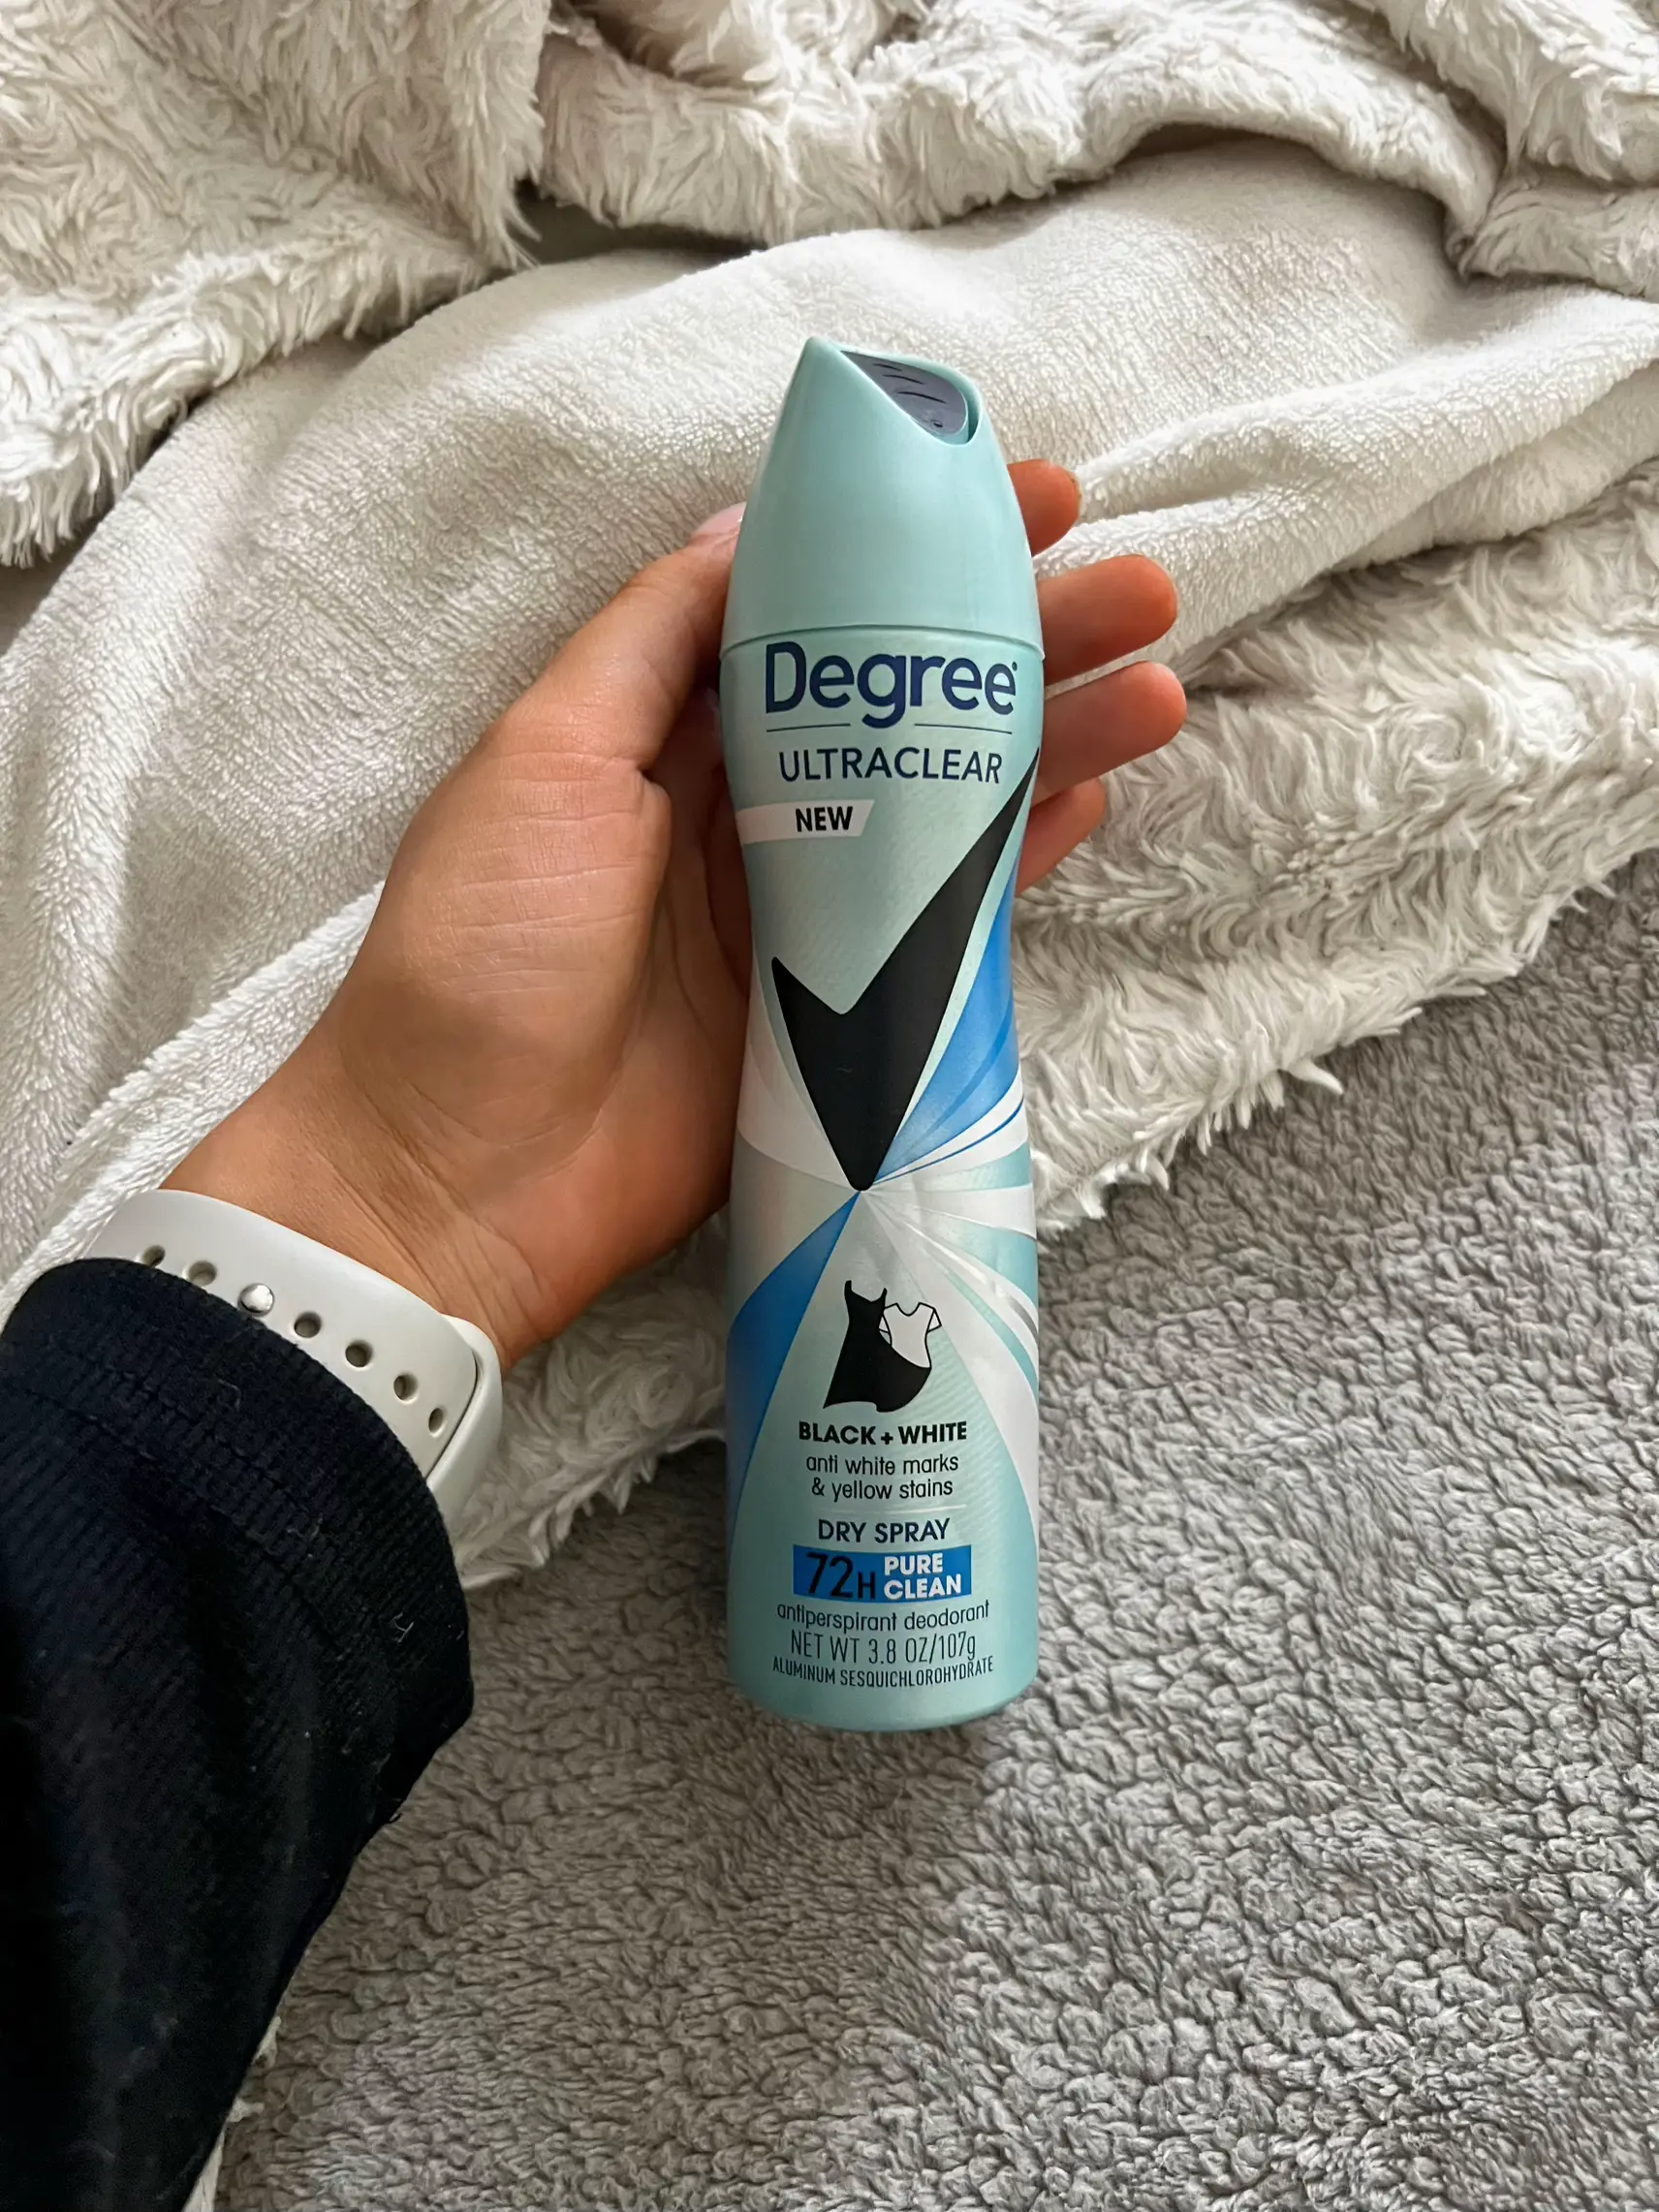 3- Dove ORIGINAL Anti-Perspirant Deodorant Spray Moisturizing 250mL/8.4 Fl  oz